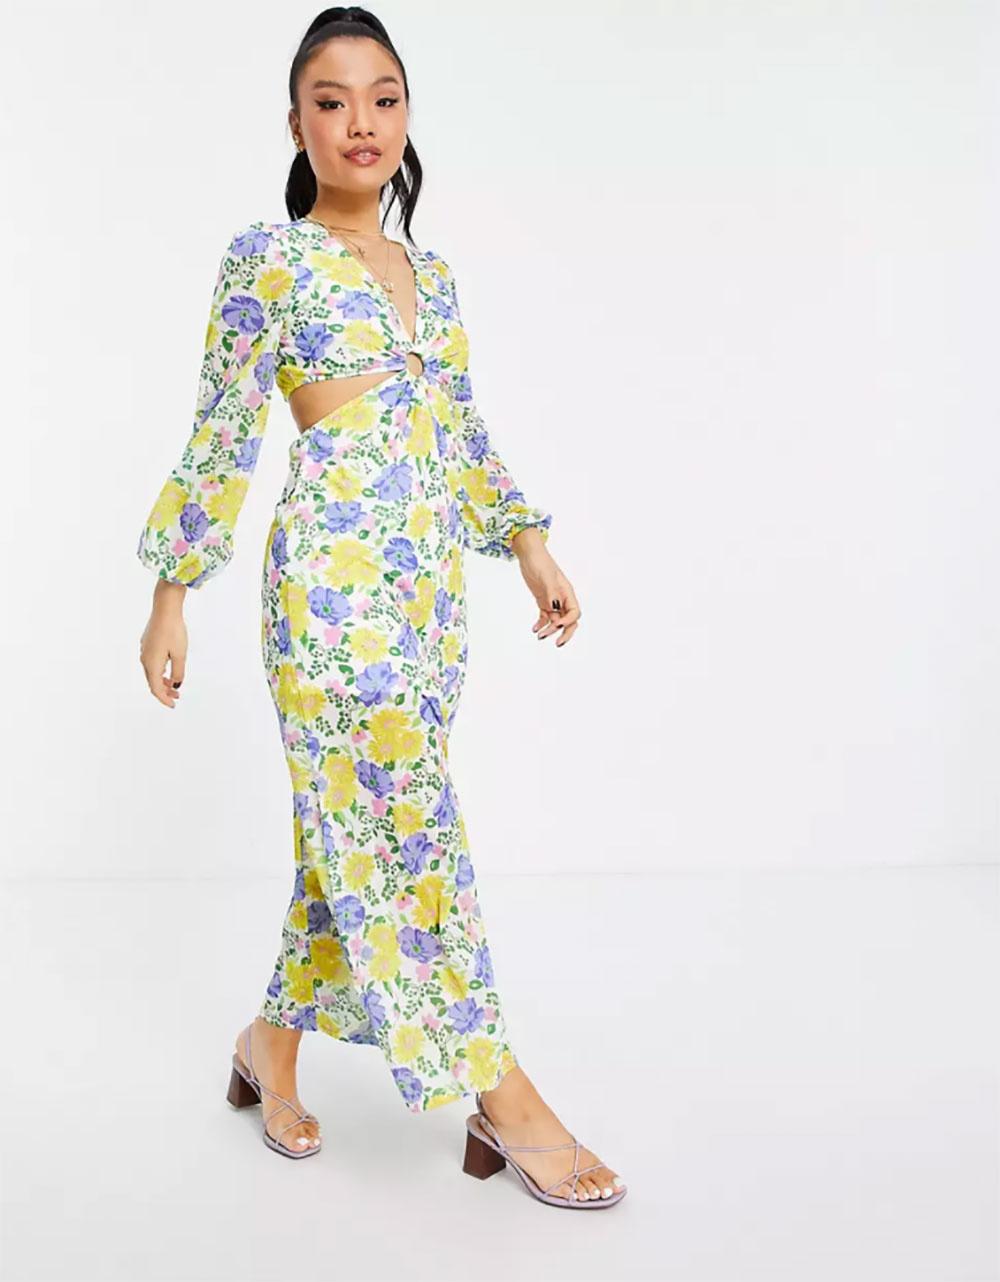 ASOS floral long-sleeve dress